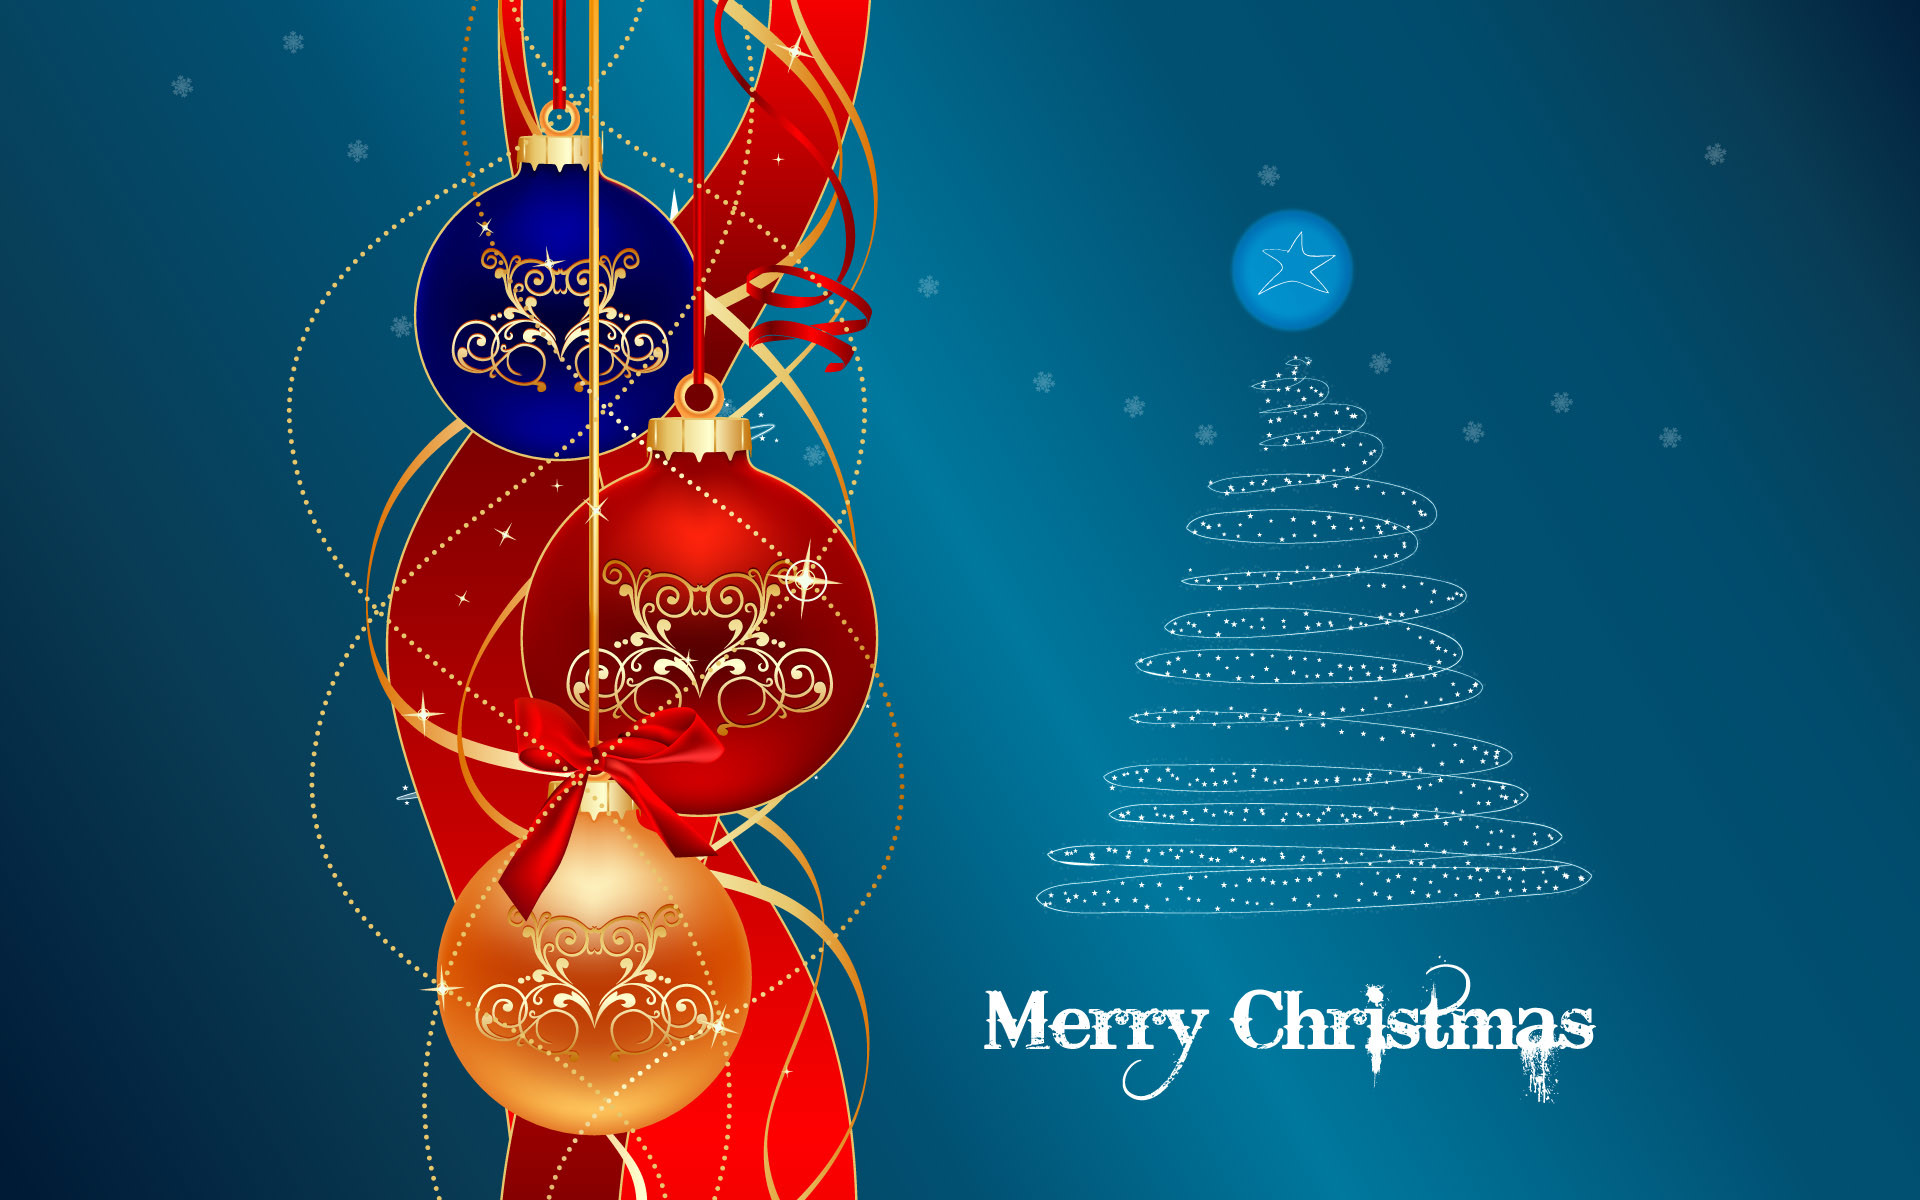 merry christmas wallpaper,illustration,graphic design,christmas ornament,advertising,graphics